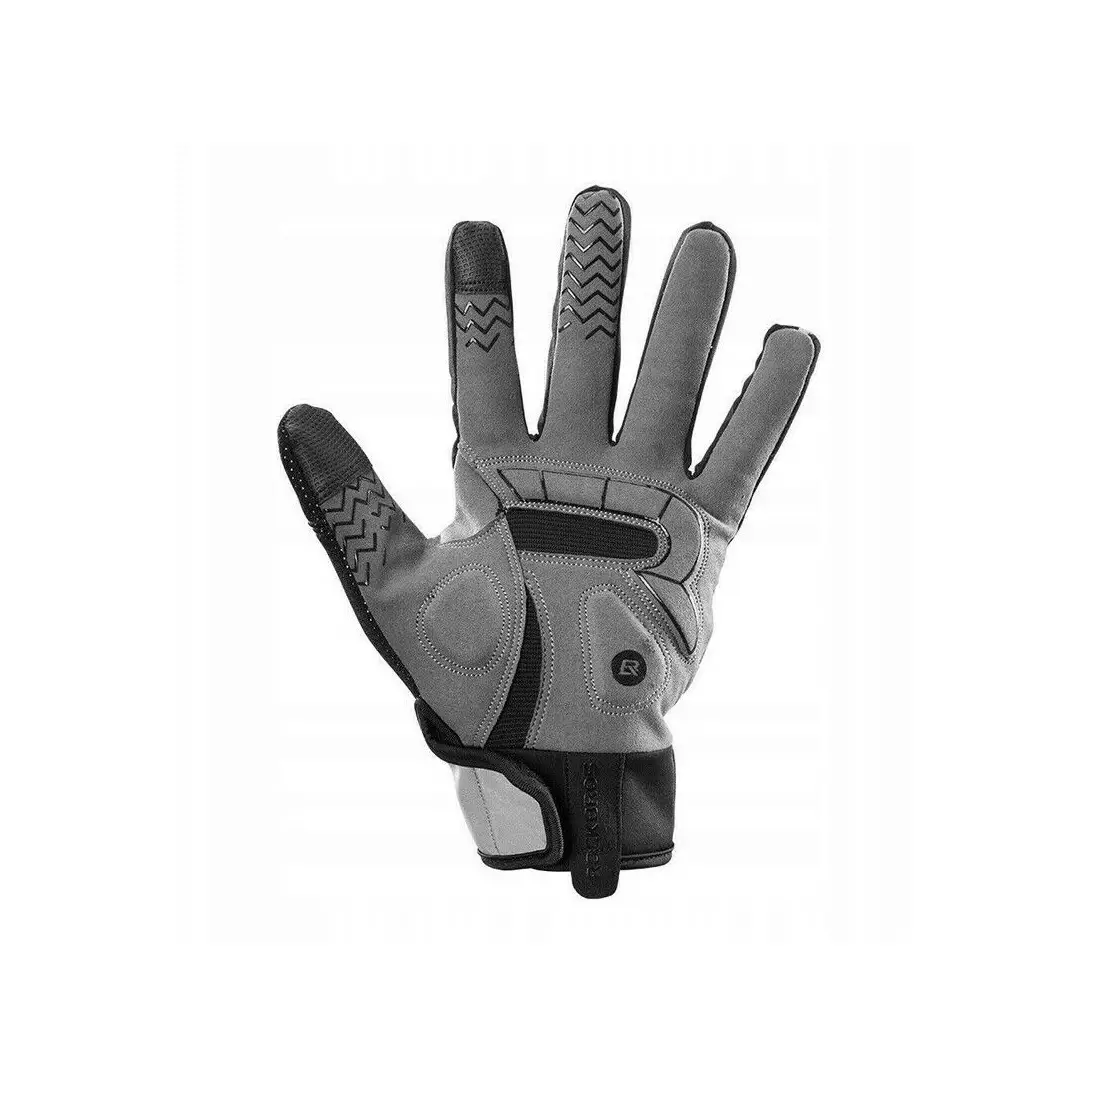 Rockbros transition bicycle gloves, membrane, black grey S173BGR